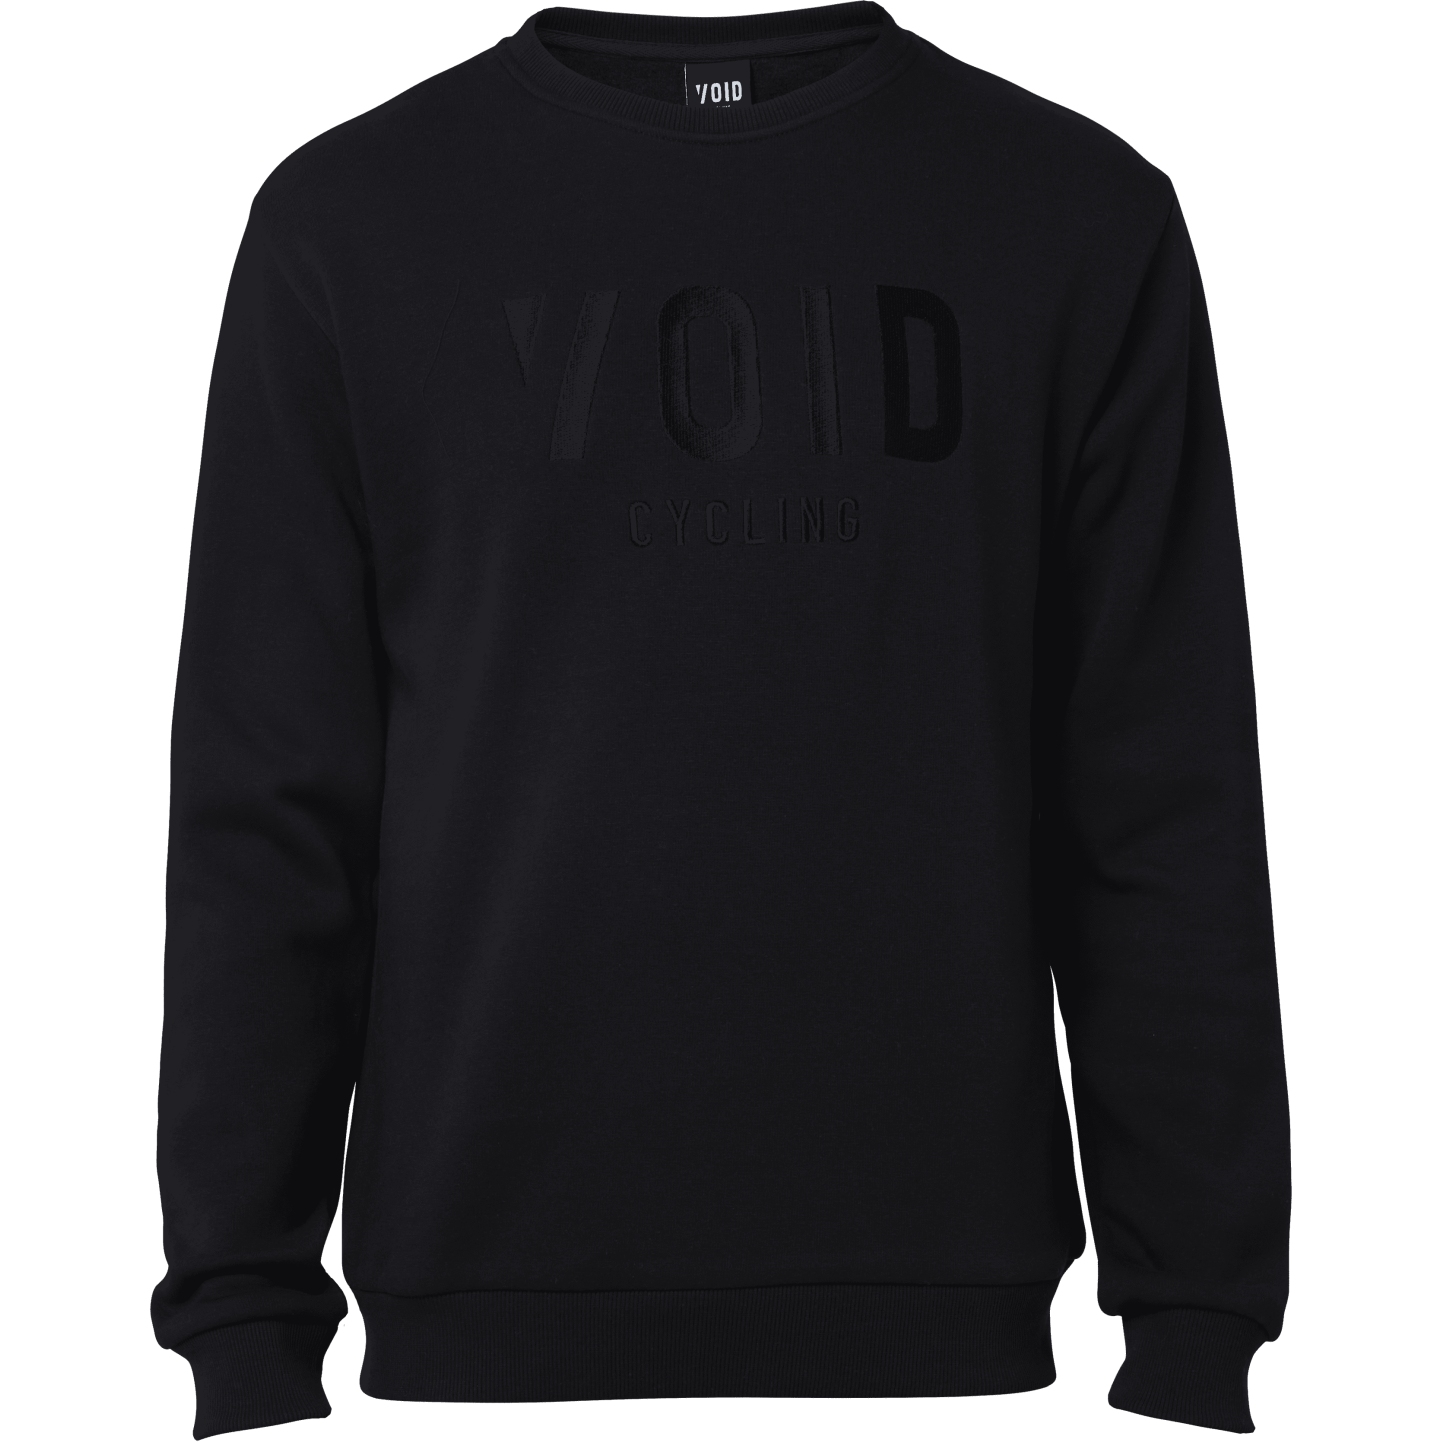 Productfoto van VOID Cycling Void Crew Sweater - Black